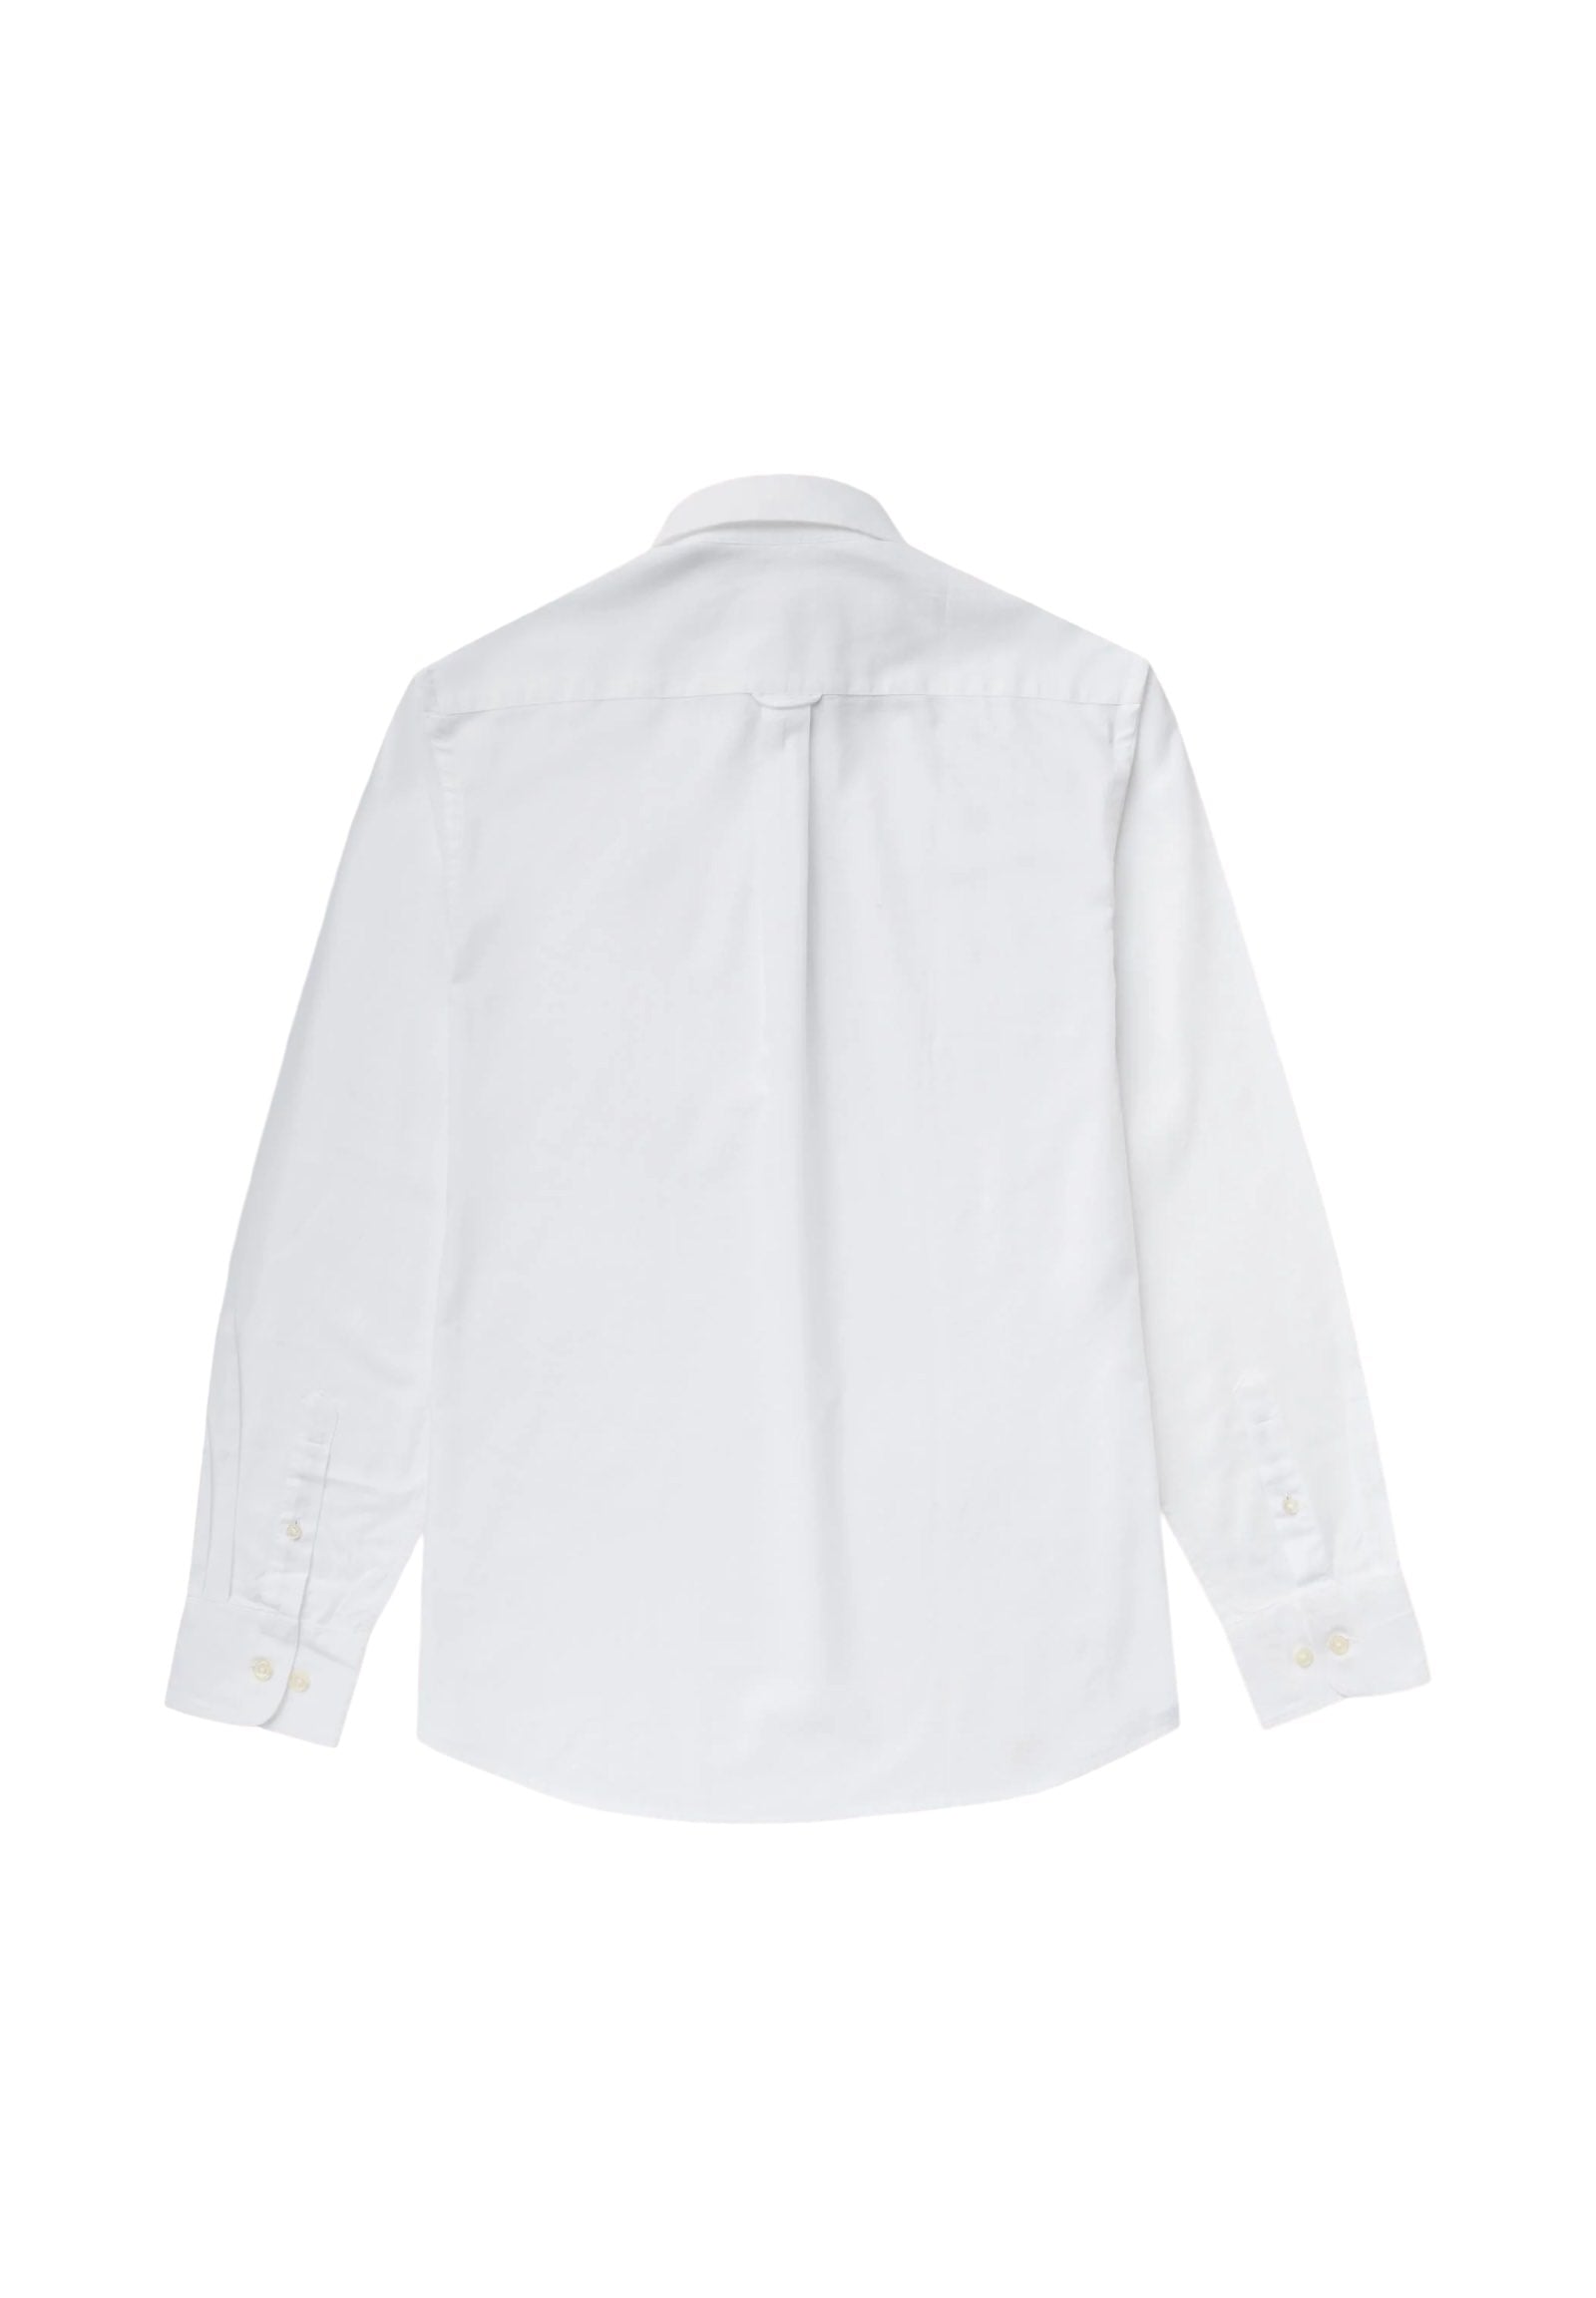 Long Sleeve Shirt 10msh201-02604 White